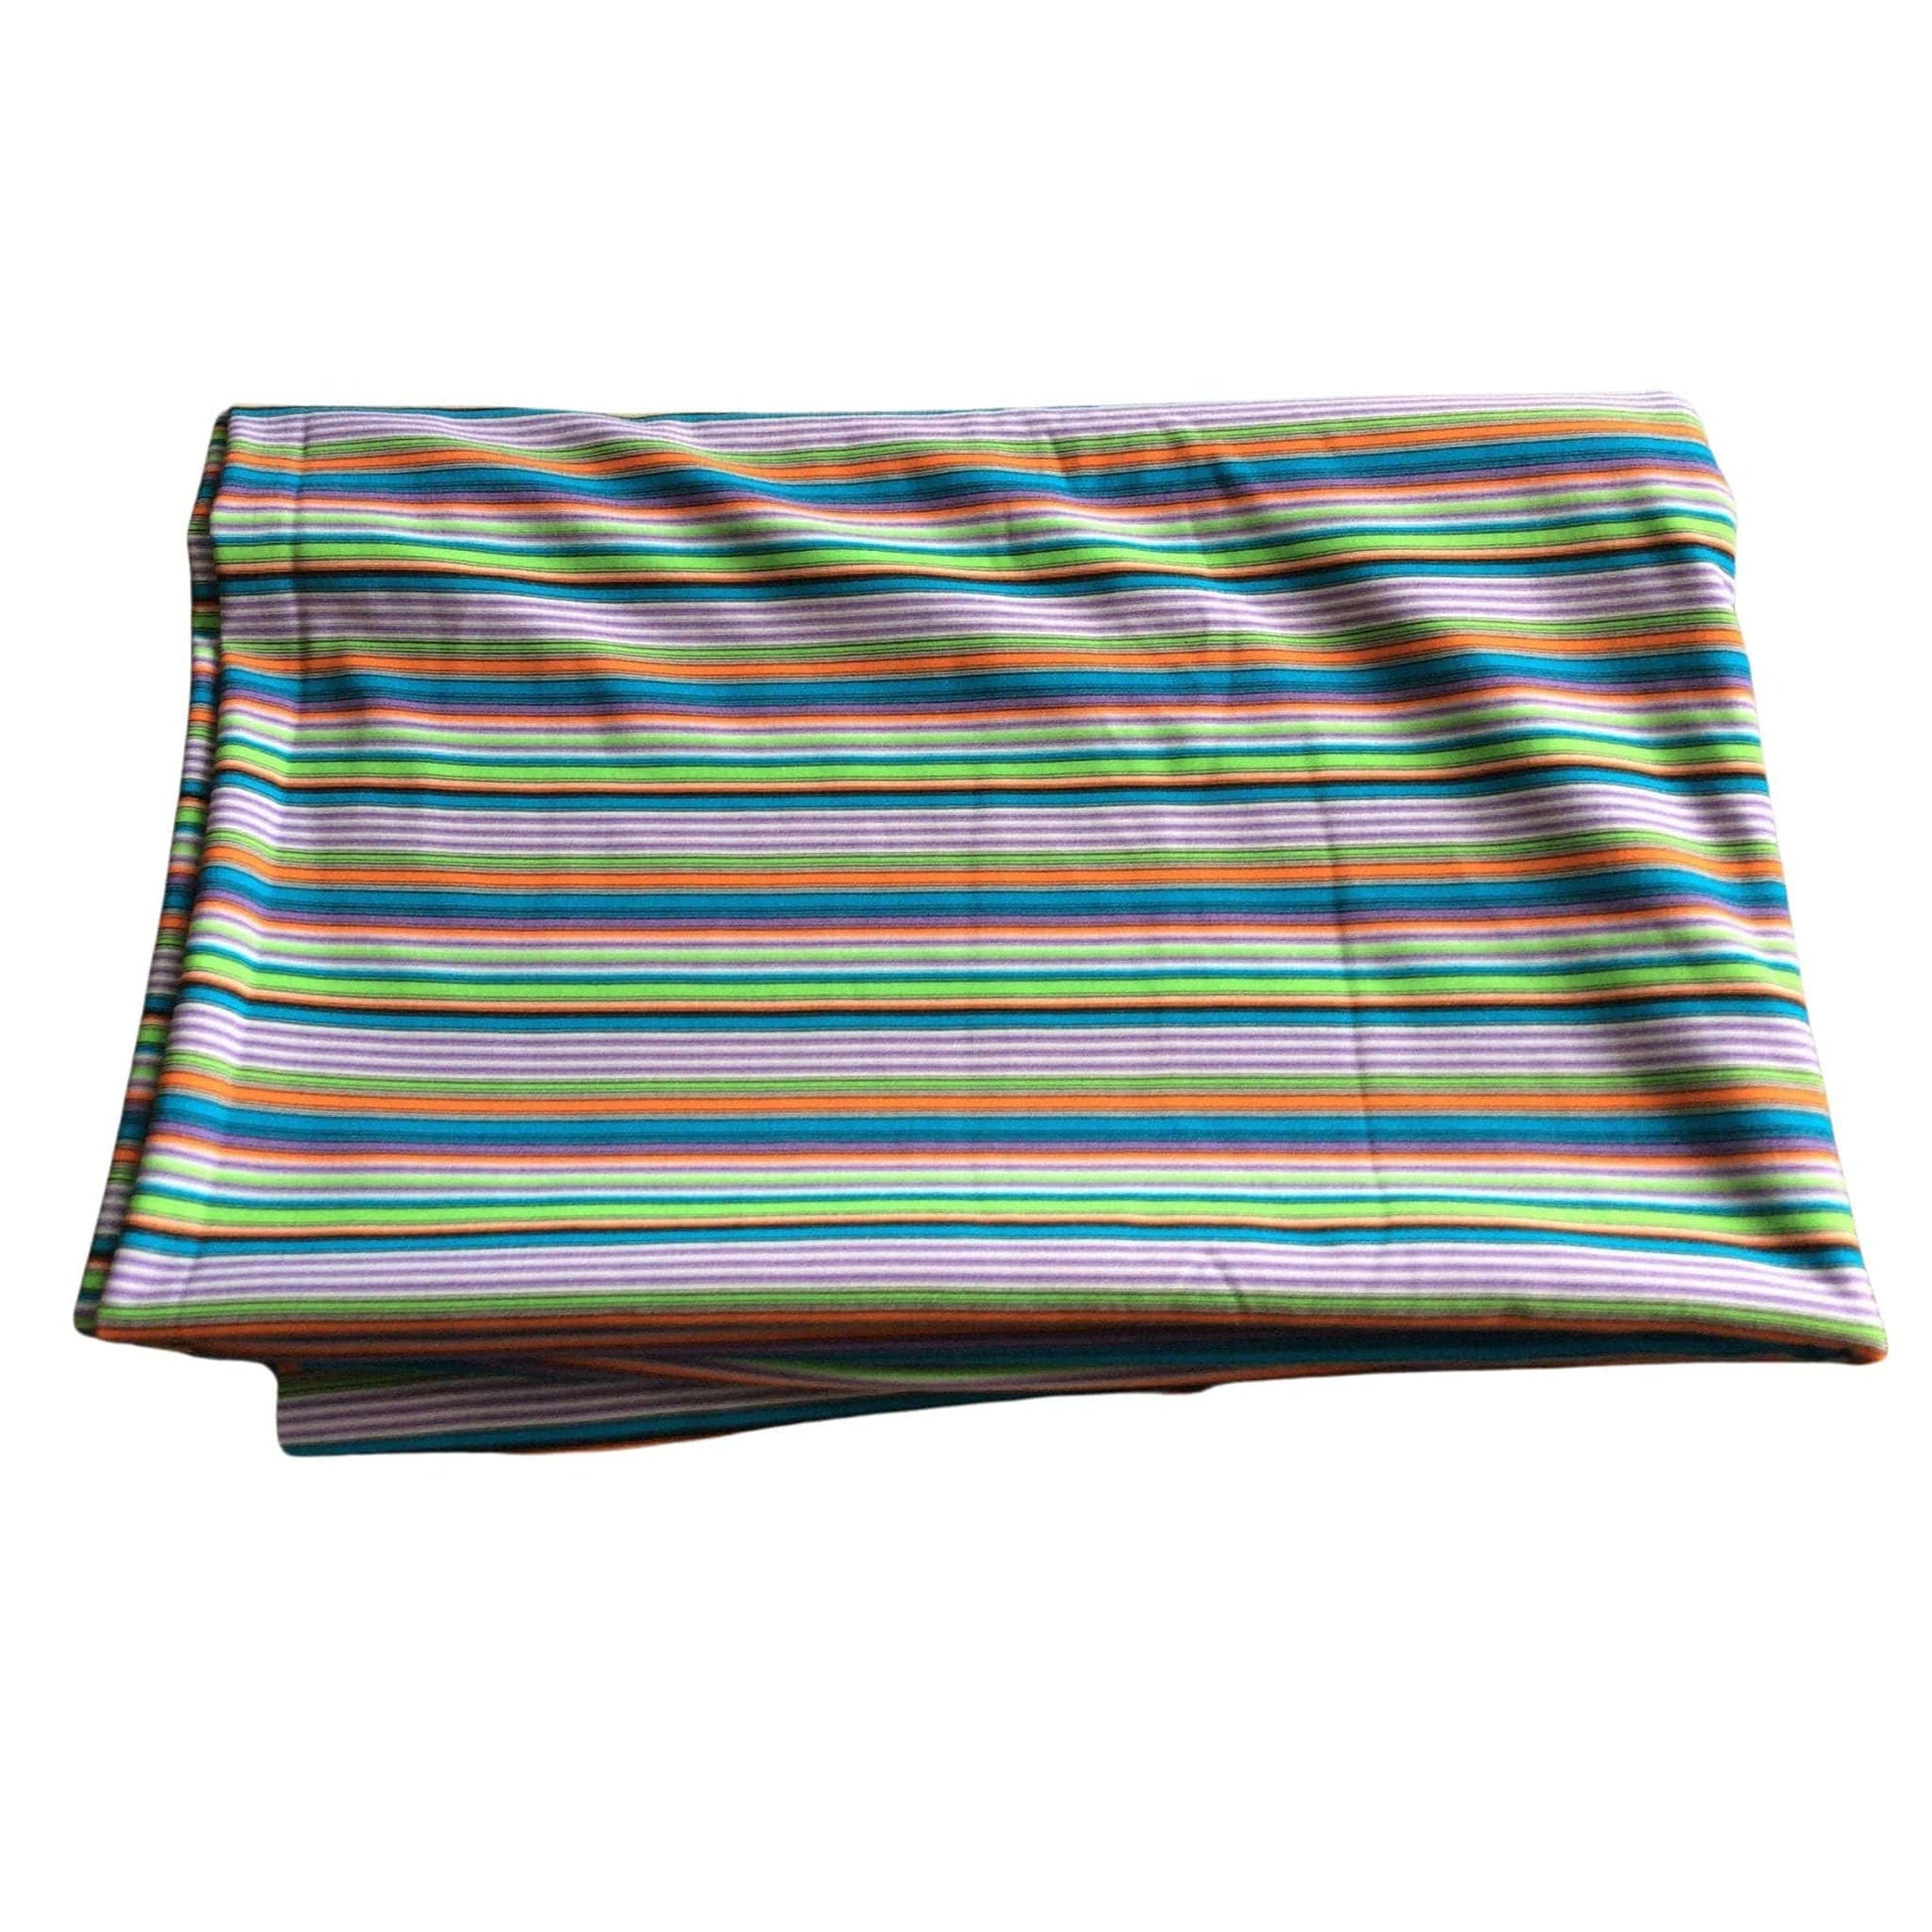 Vintage Striped Fabric Multi / Polyester / Vintage 1970s